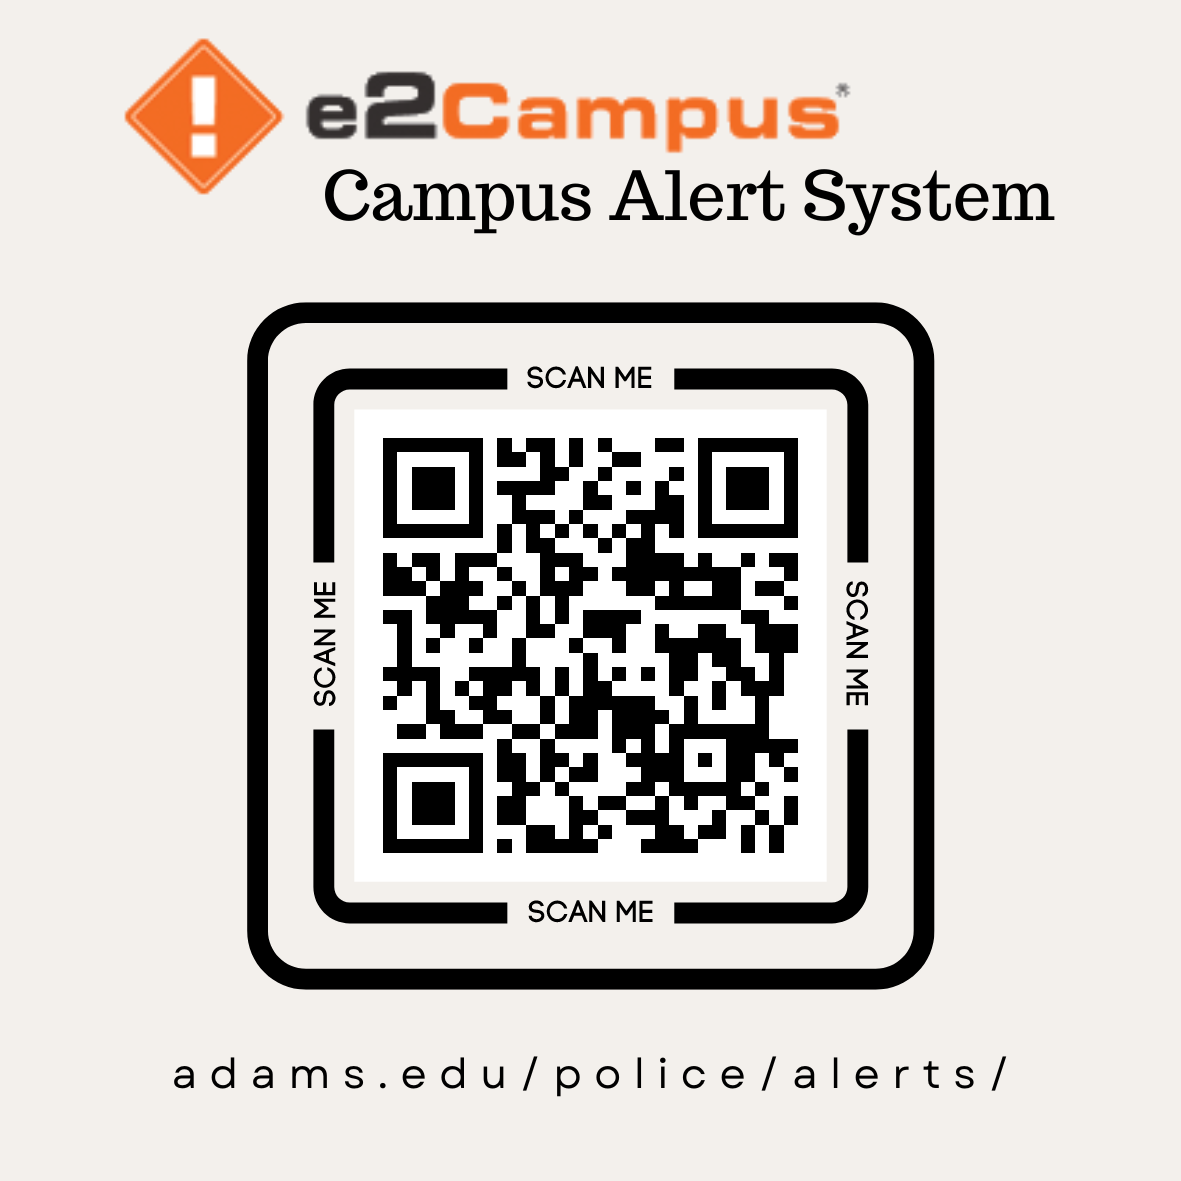 e2Campus Campus Alert System. Scan me. adams.edu/police/alerts